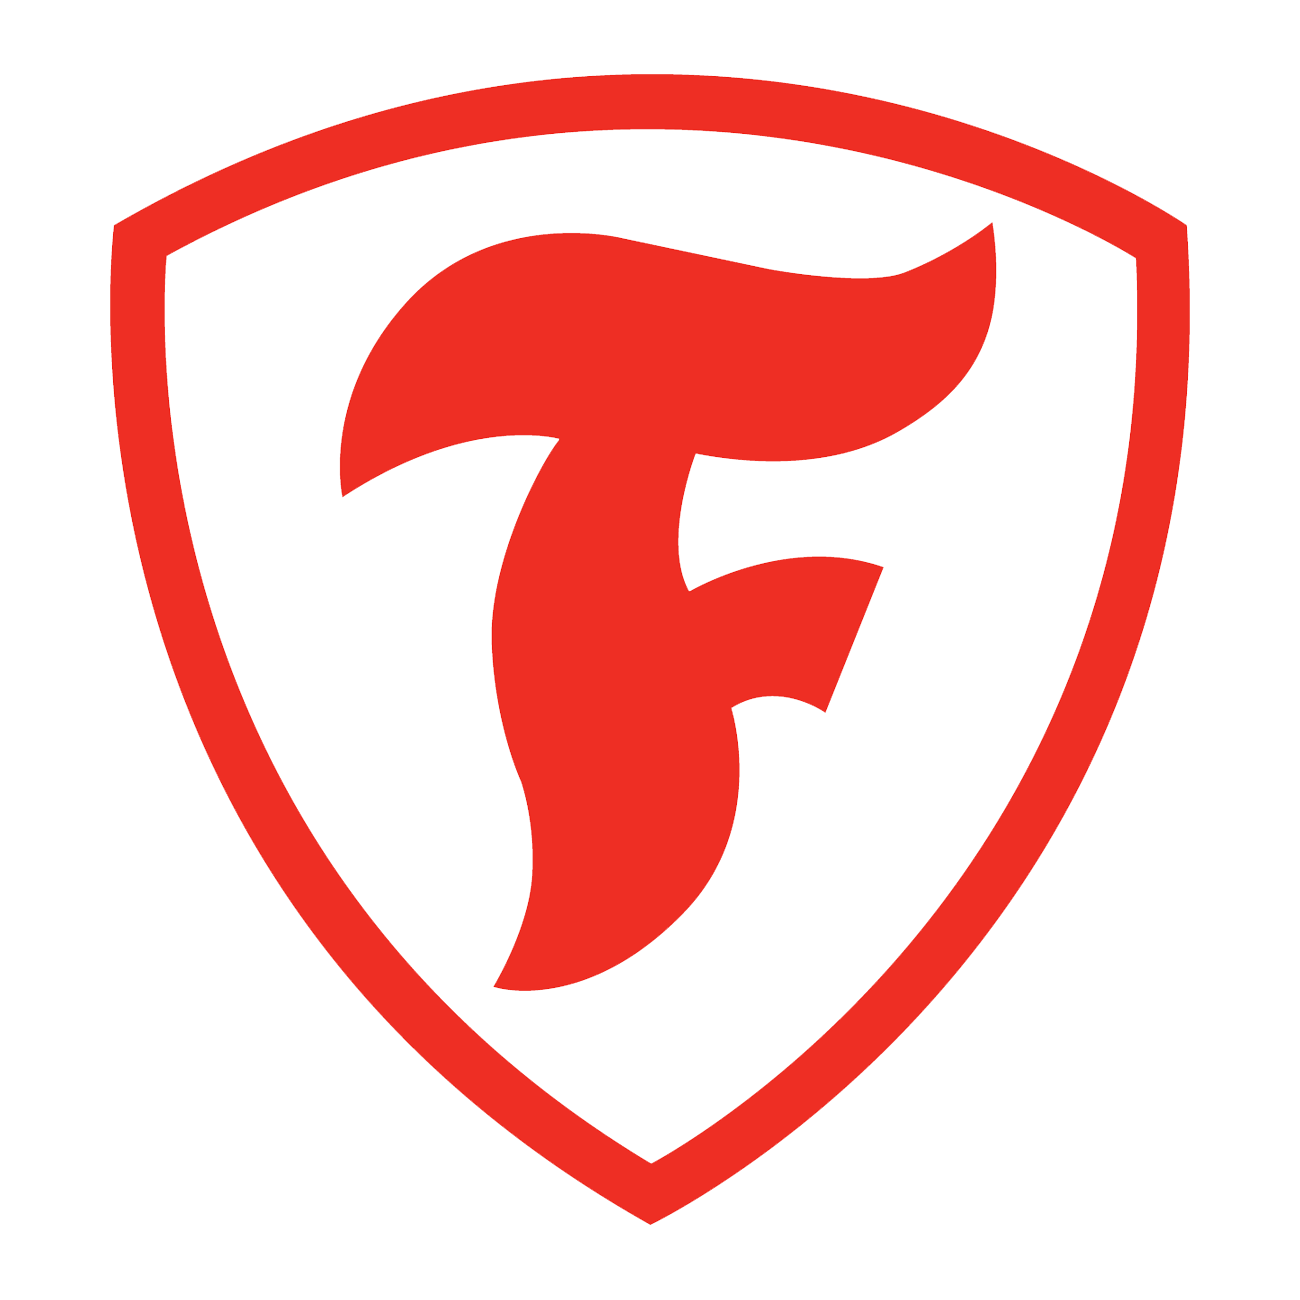 Firestone Logo - Firestone Au